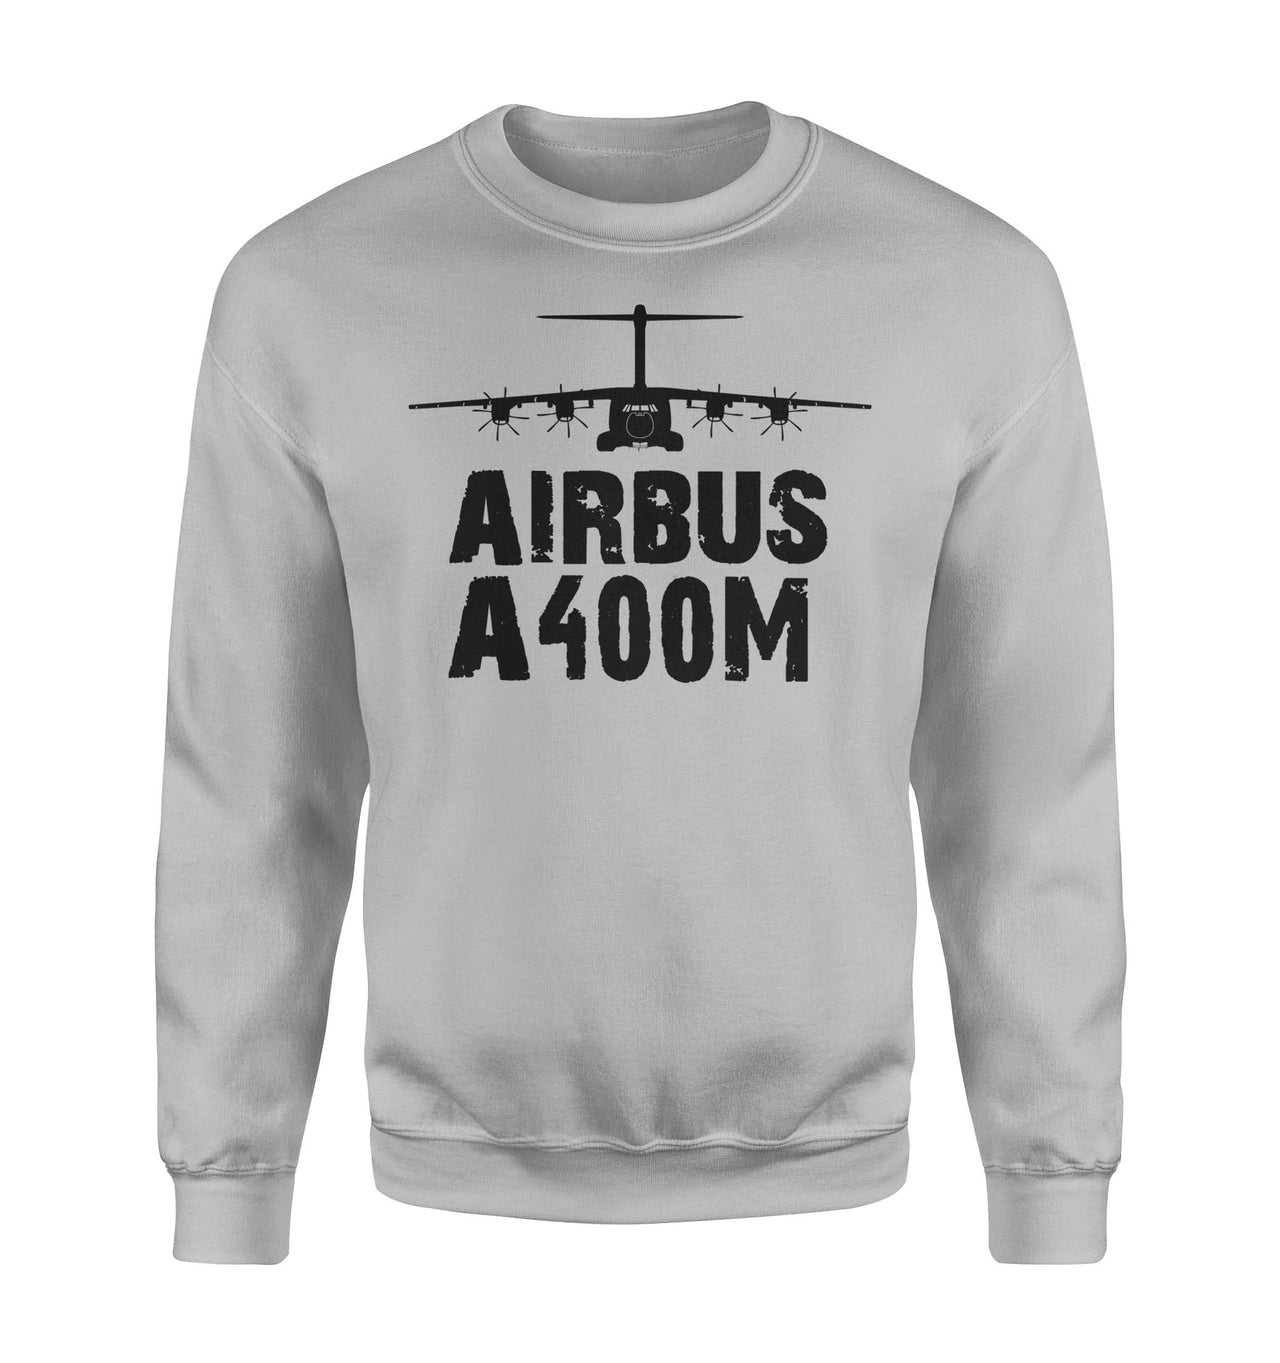 Airbus A400M & Plane Designed Sweatshirts